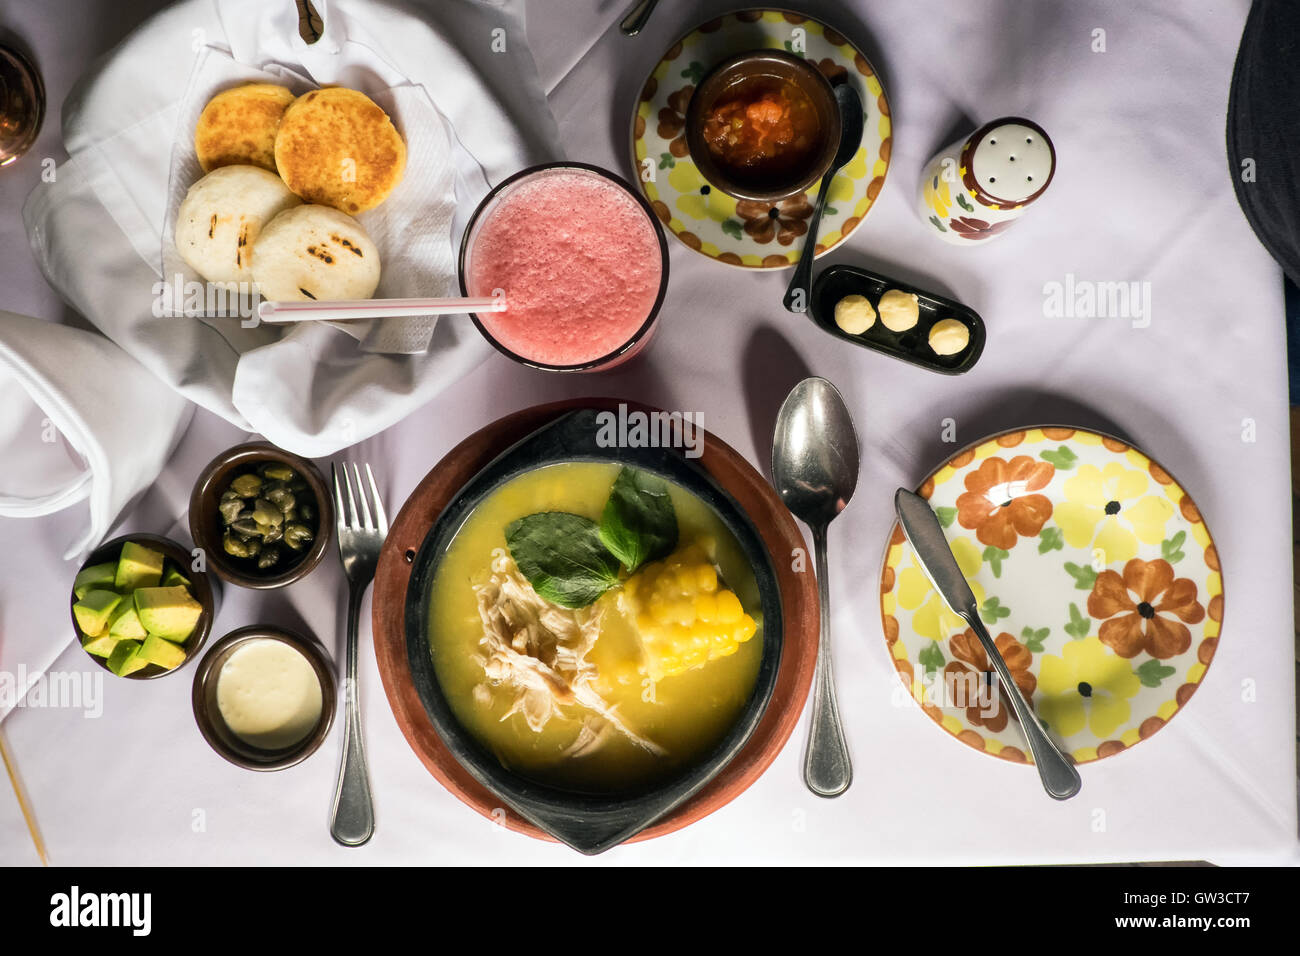 Ajiacó, the soup from Bogotá Stock Photo